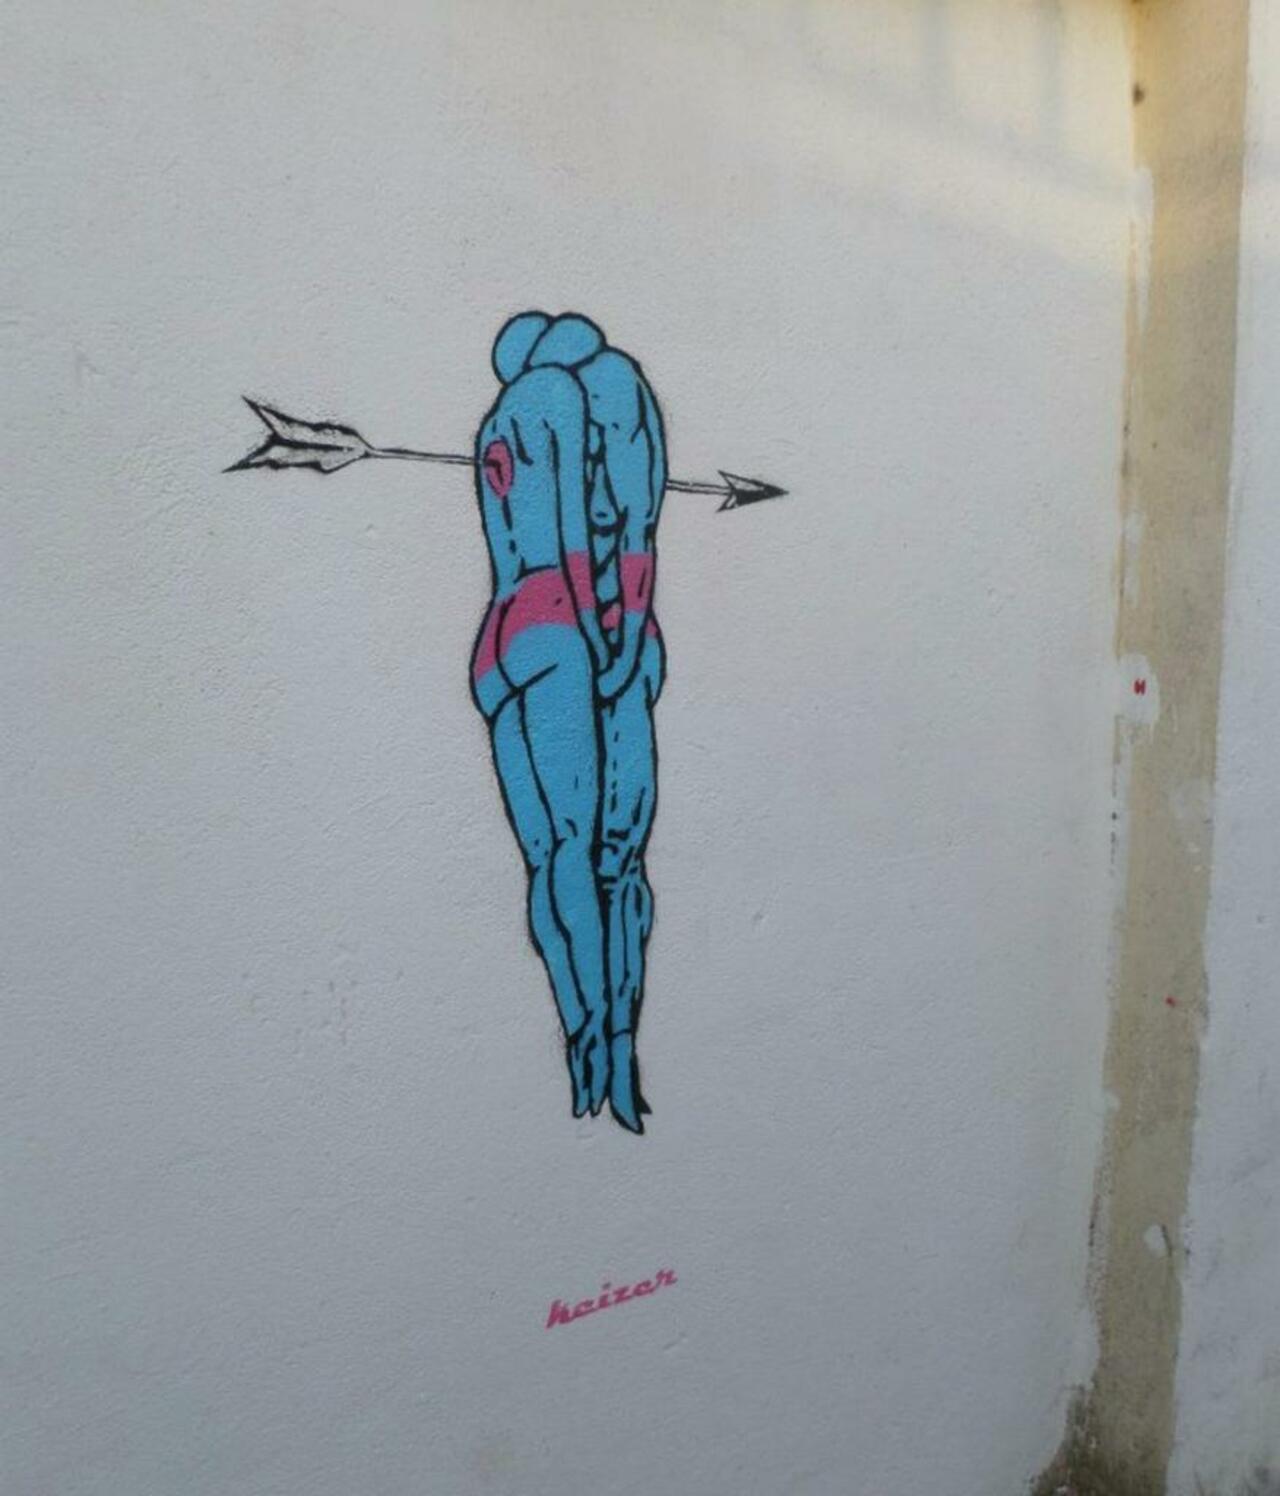 RT @hypatia373: #art #streetart #graffiti https://t.co/b3ZFcsEOnY